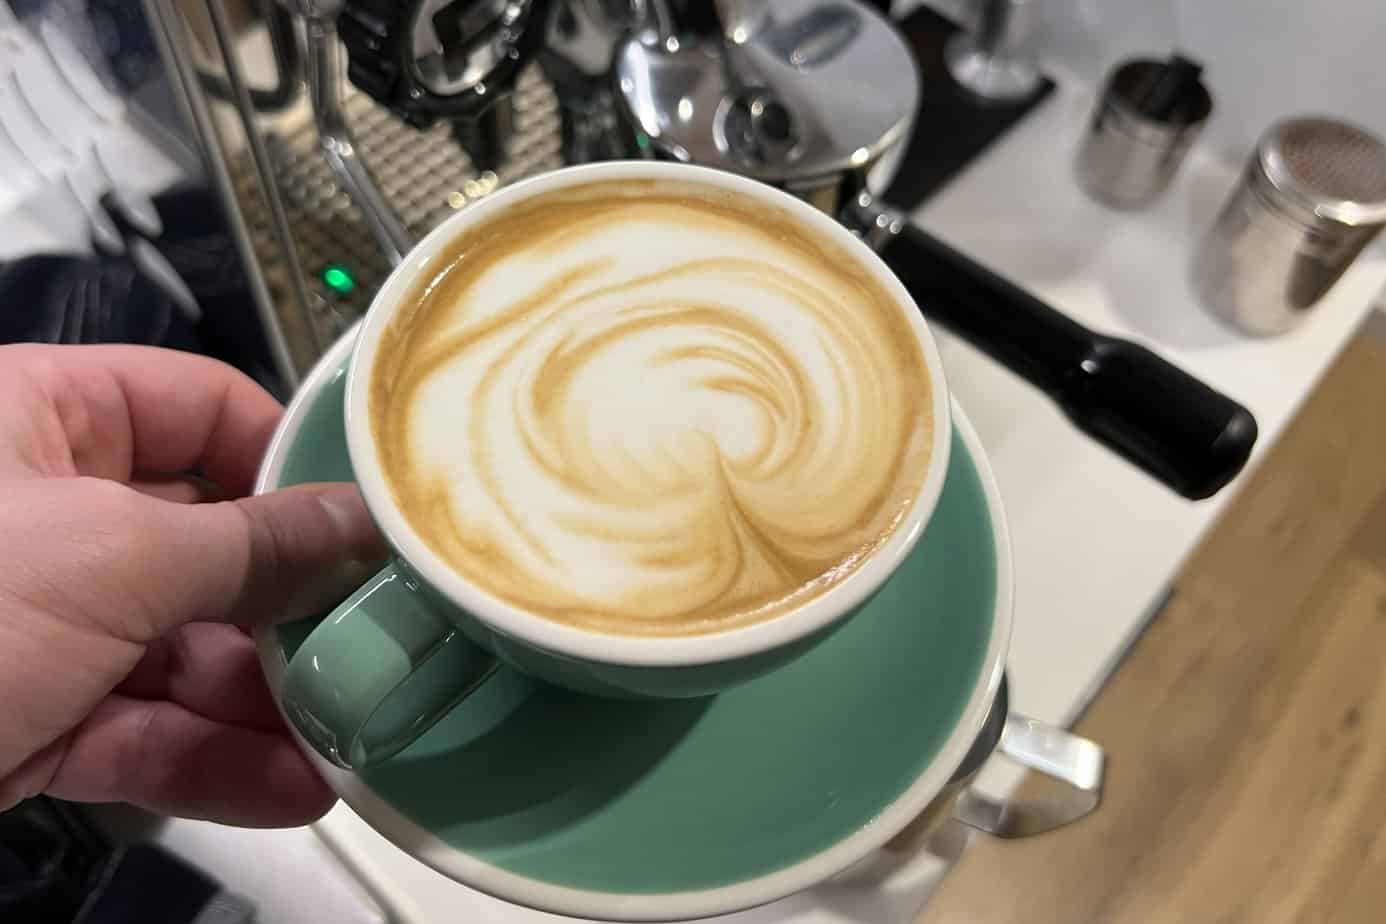 A nice latte